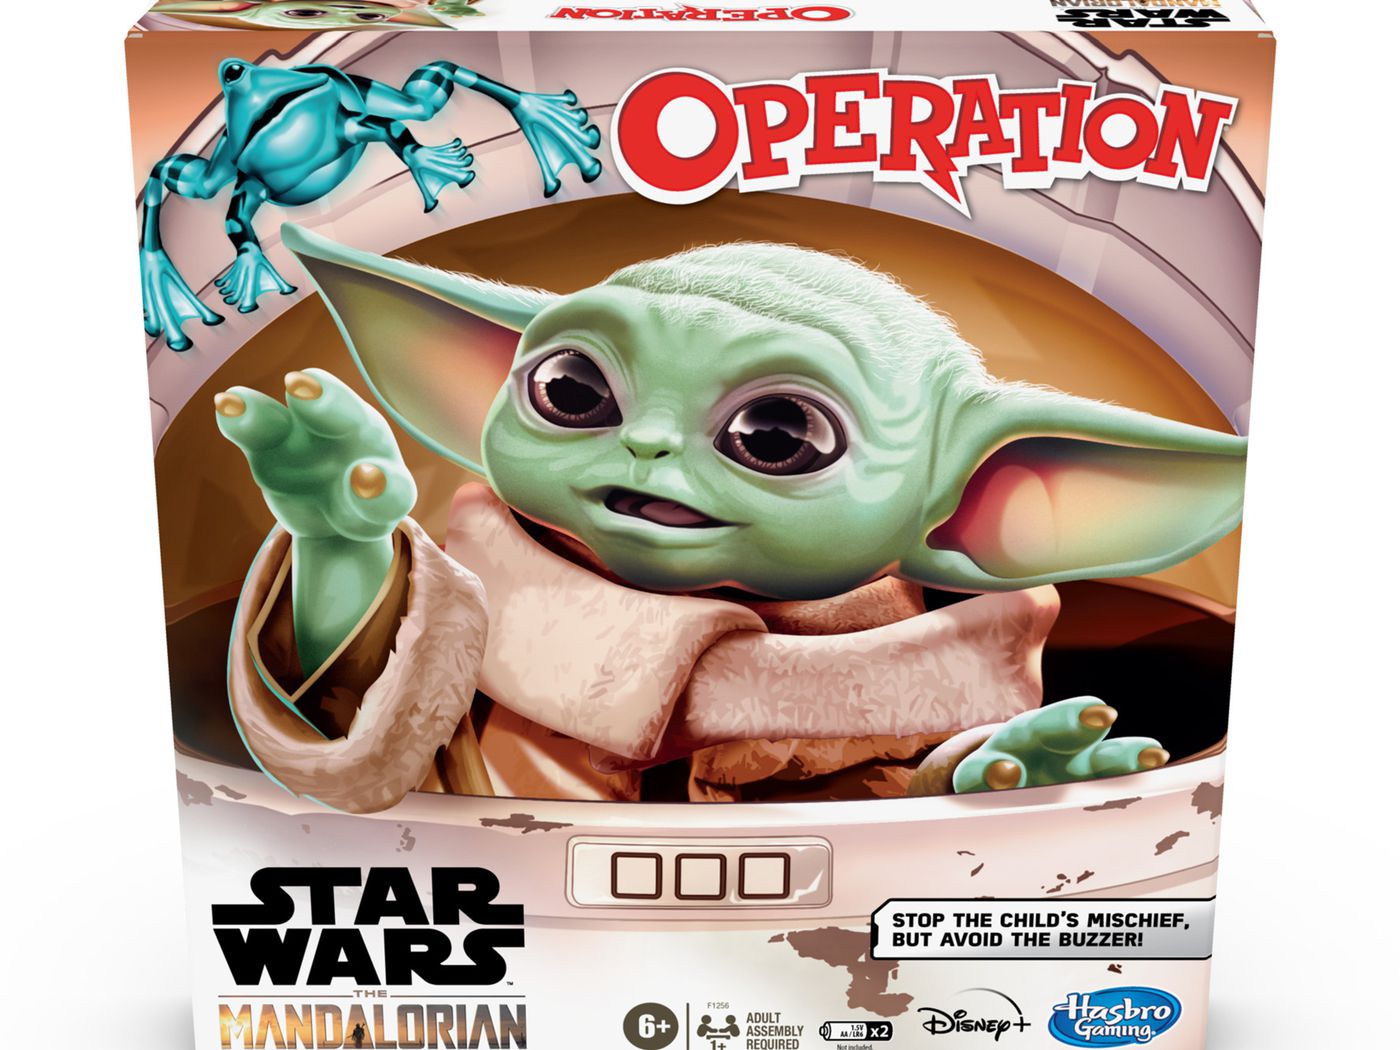 Hasbro Star Wars Operation Game Chewbacca Edition Children Kids Fun Toy 6 Years+